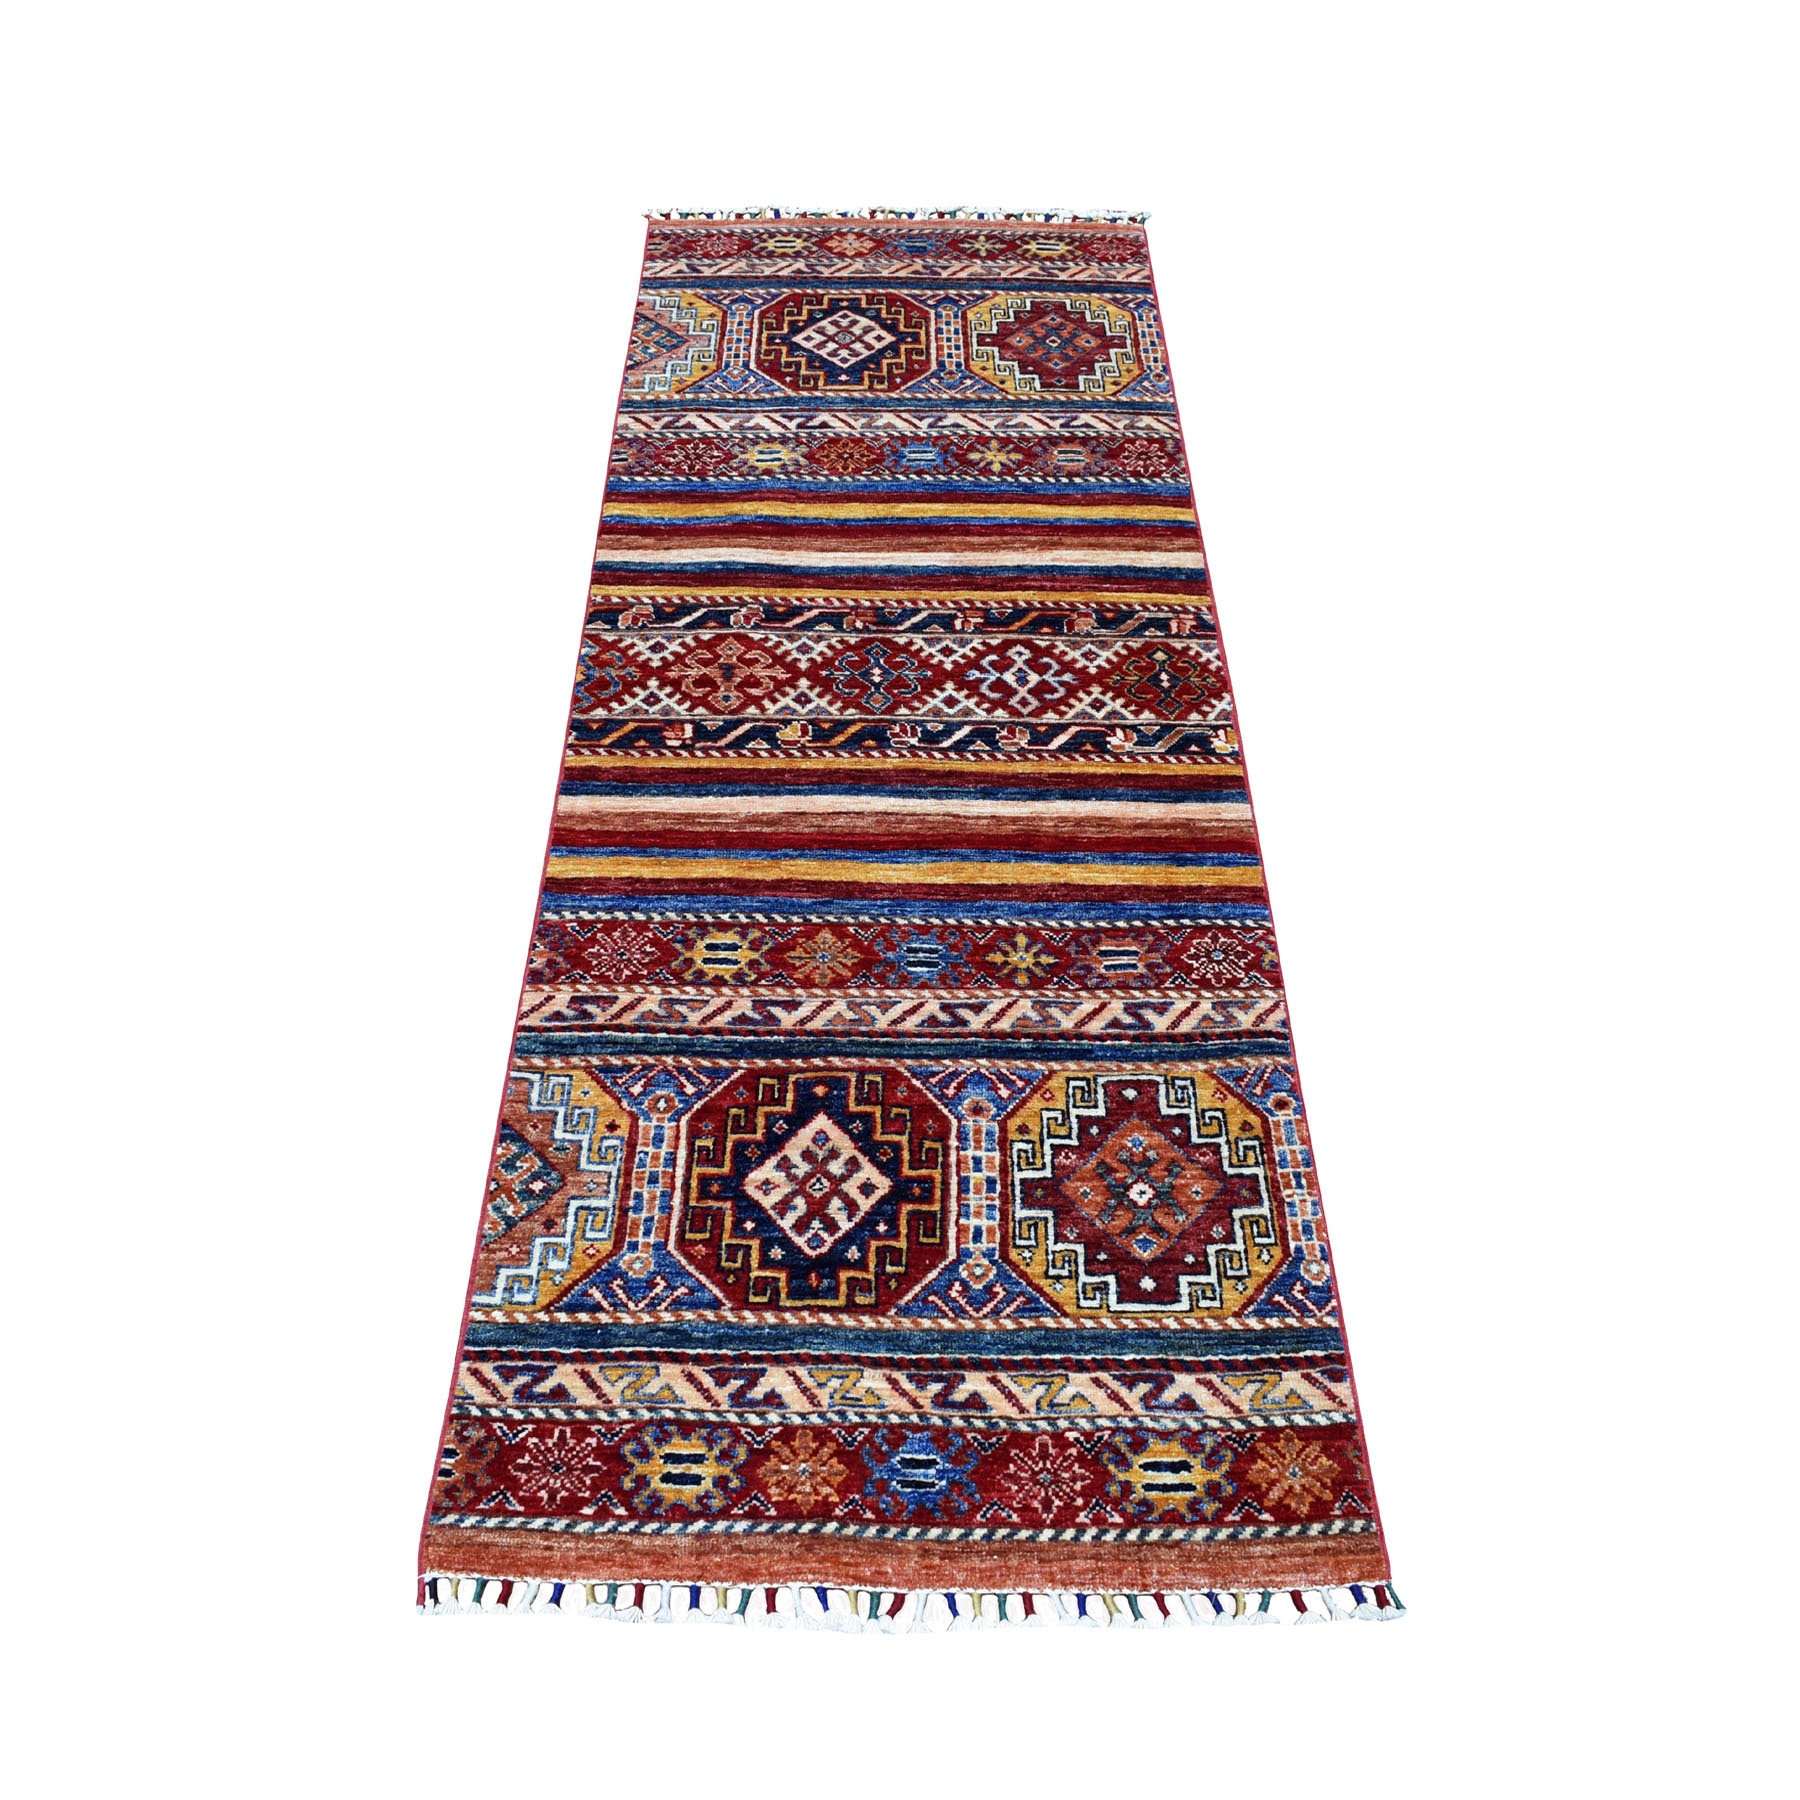 2'5"x6'7" Red Khorjin Design Runner Super Kazak Geometric Hand Woven Pure Wool Oriental Rug 